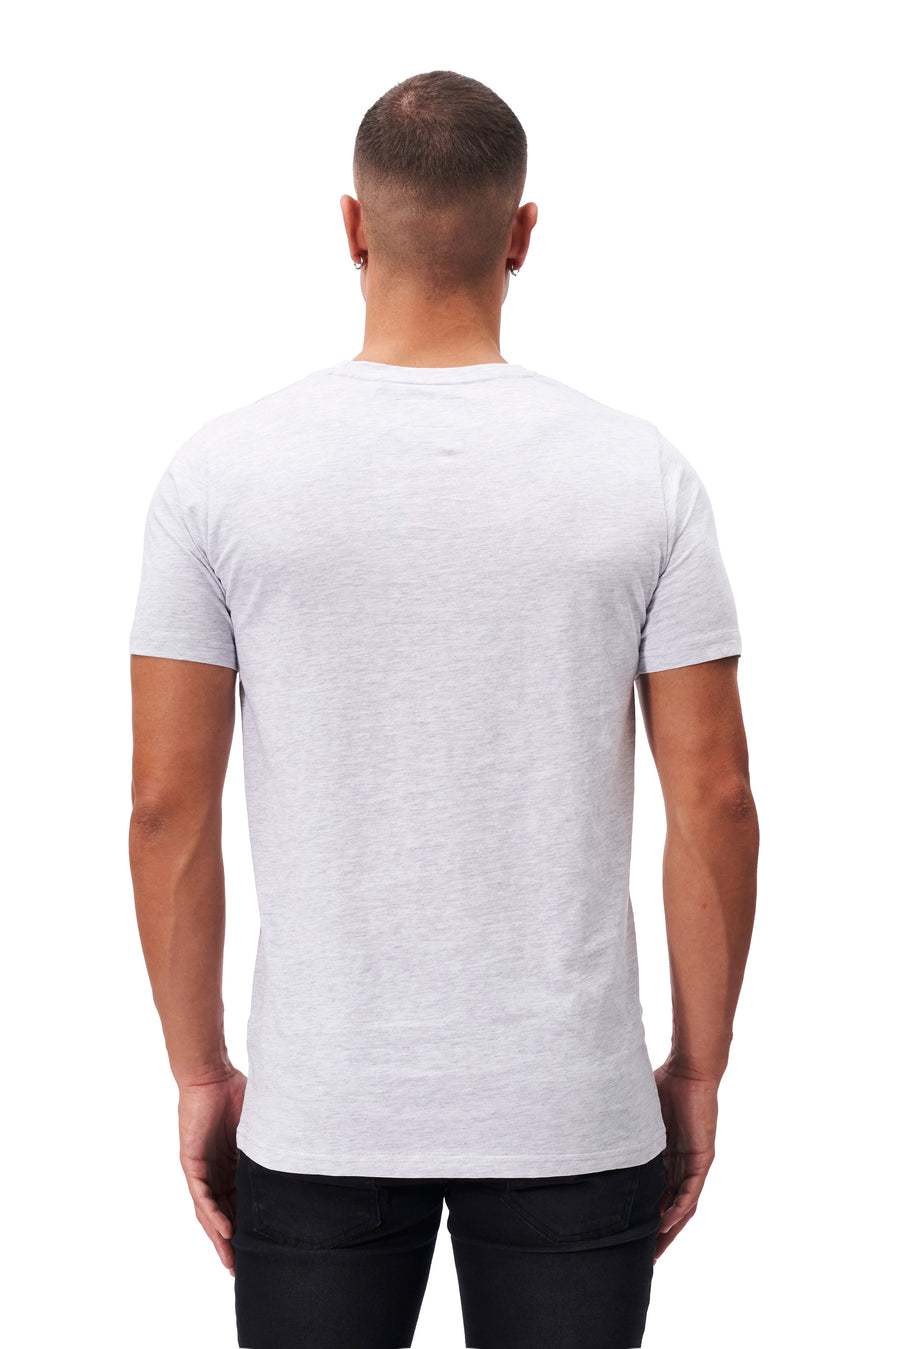 Sawton Three Pack T-Shirts in Black/White/Grey Marl